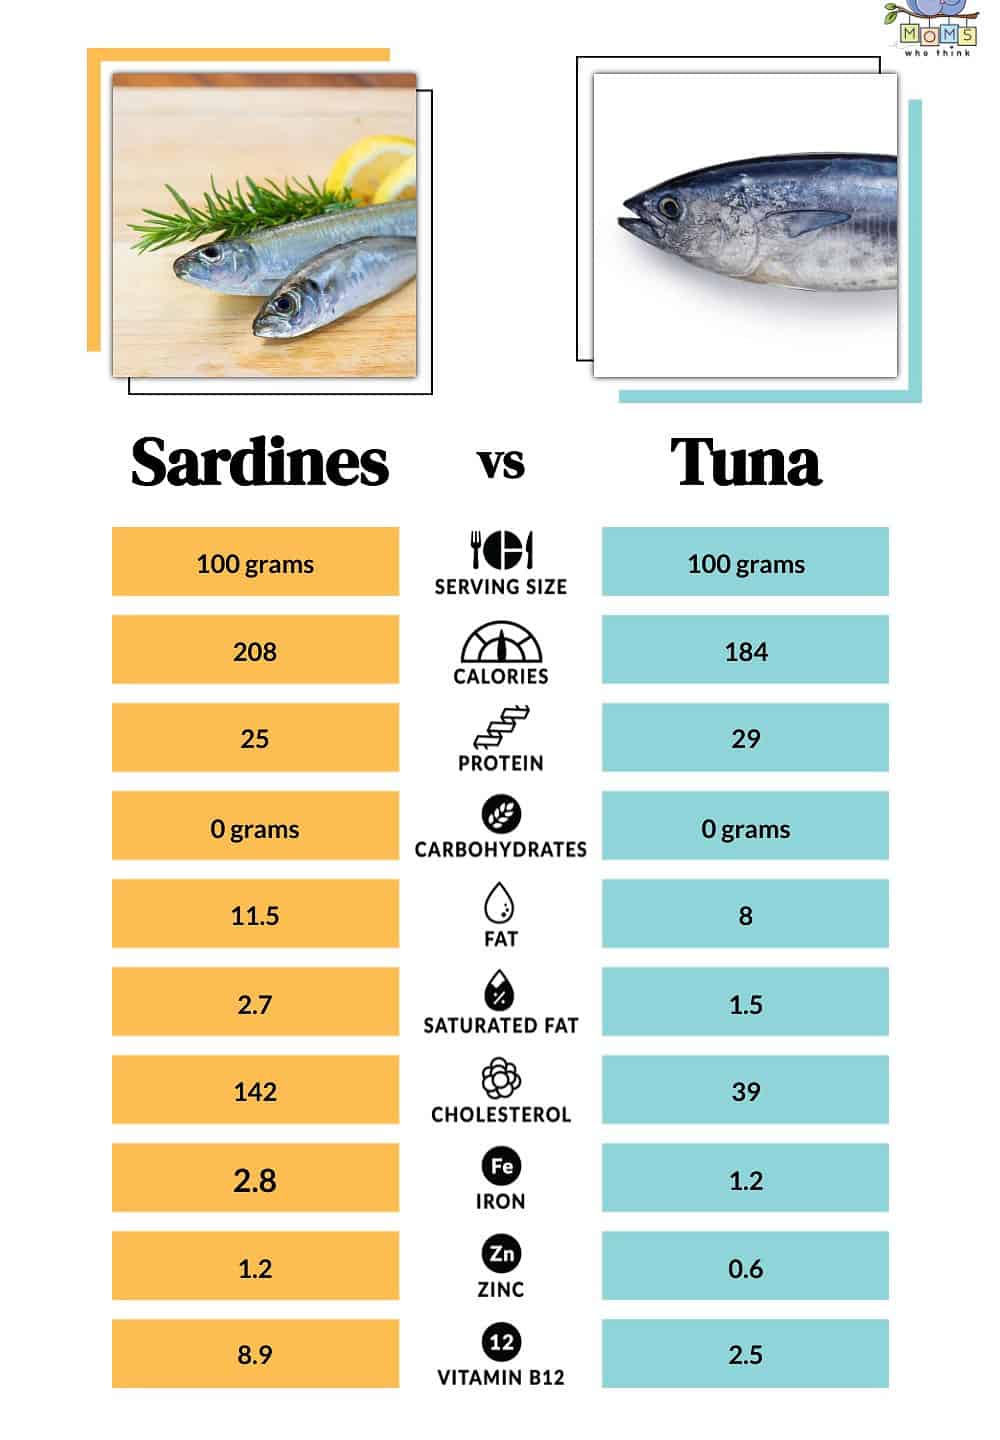 Sardines vs Tuna Nutritional Facts